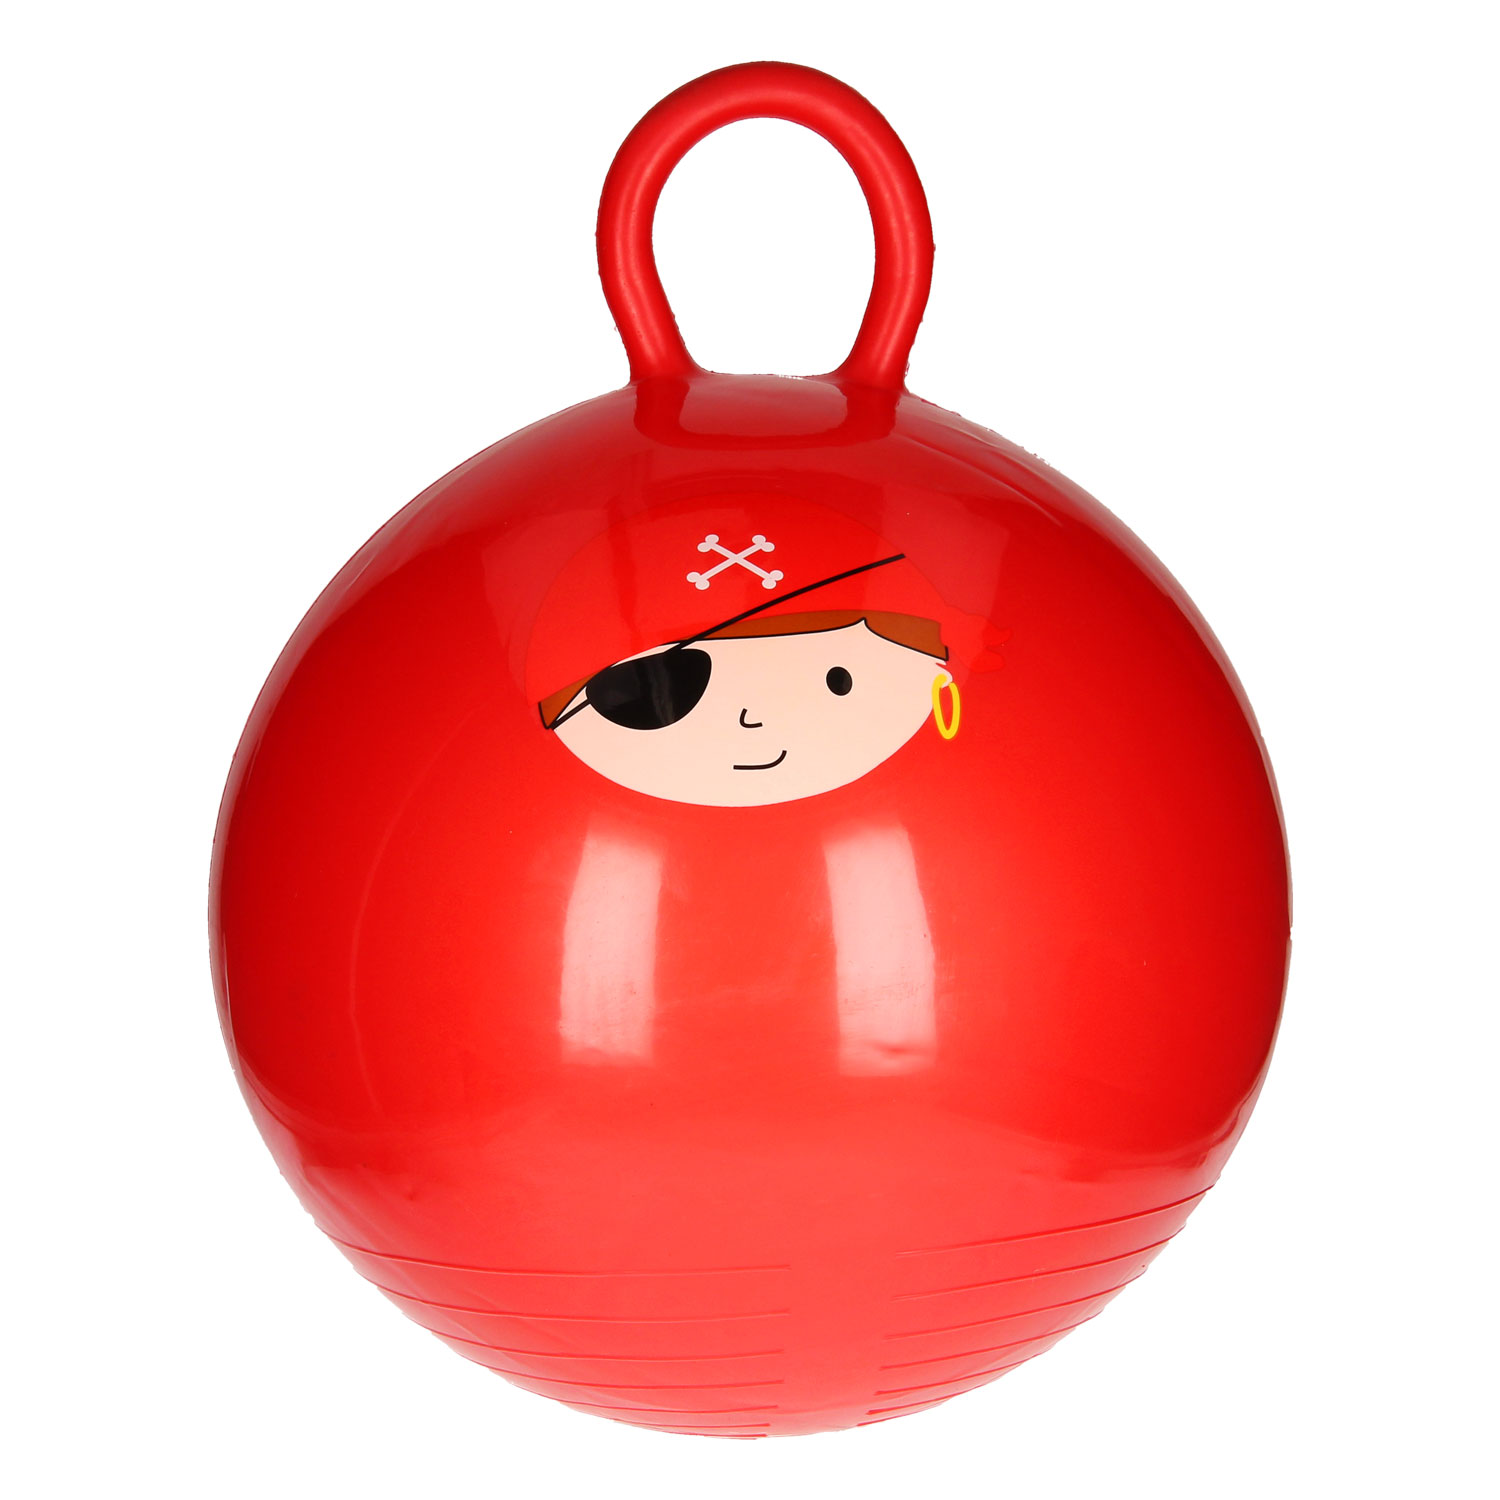 Hüpfball Hüpfbälle Skippy-Ball Hopser Springball Pirat 46 cm Piratenkopf Piraten 